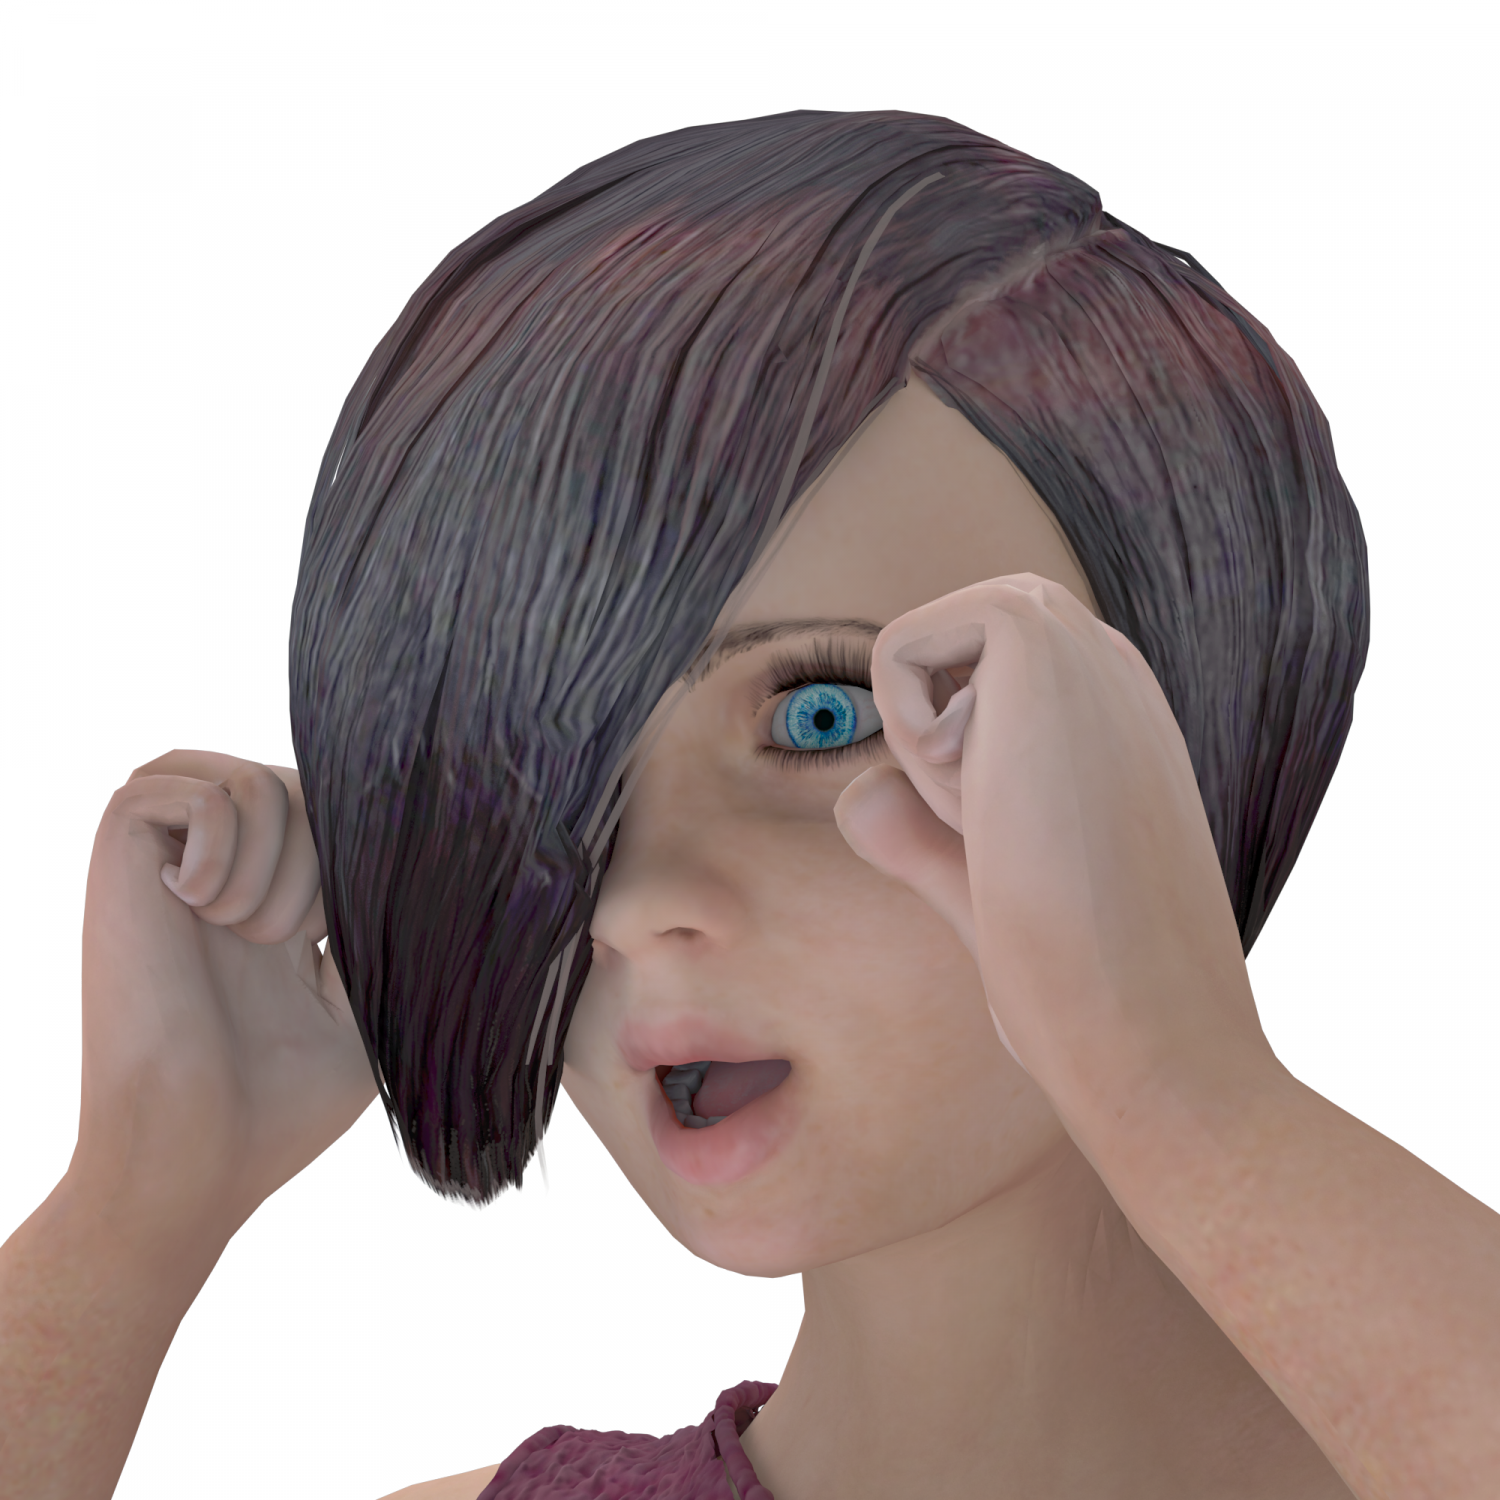 Short Hair Hair Style Girl Short Hair Cape 4 - 3D Model by cg-bob